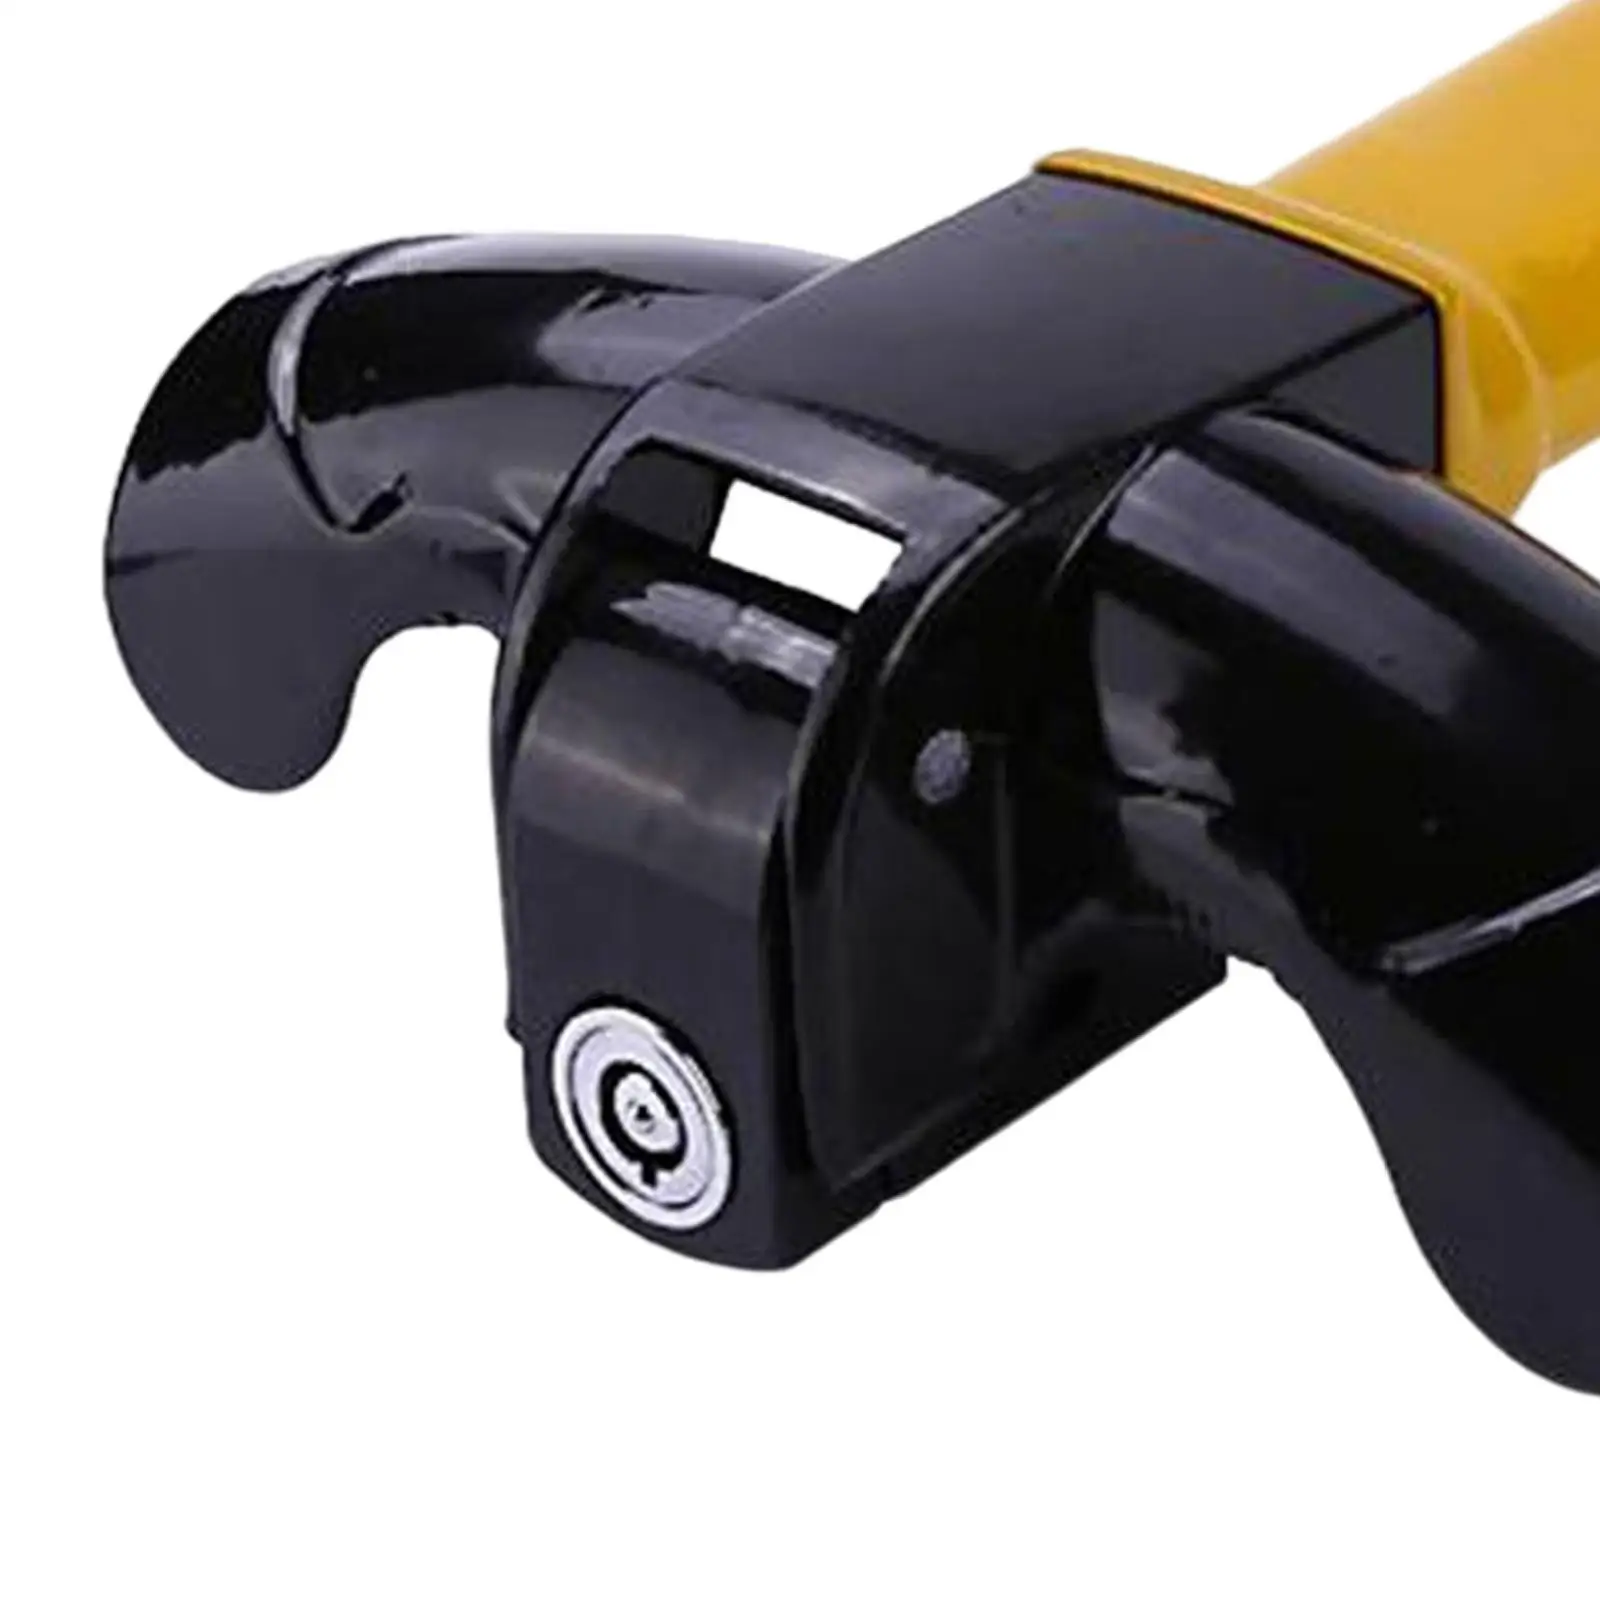 Car Steering Wheel Lock Tool with 2Pcs Keys Durable Anti Theft for Van SUV Vehicles